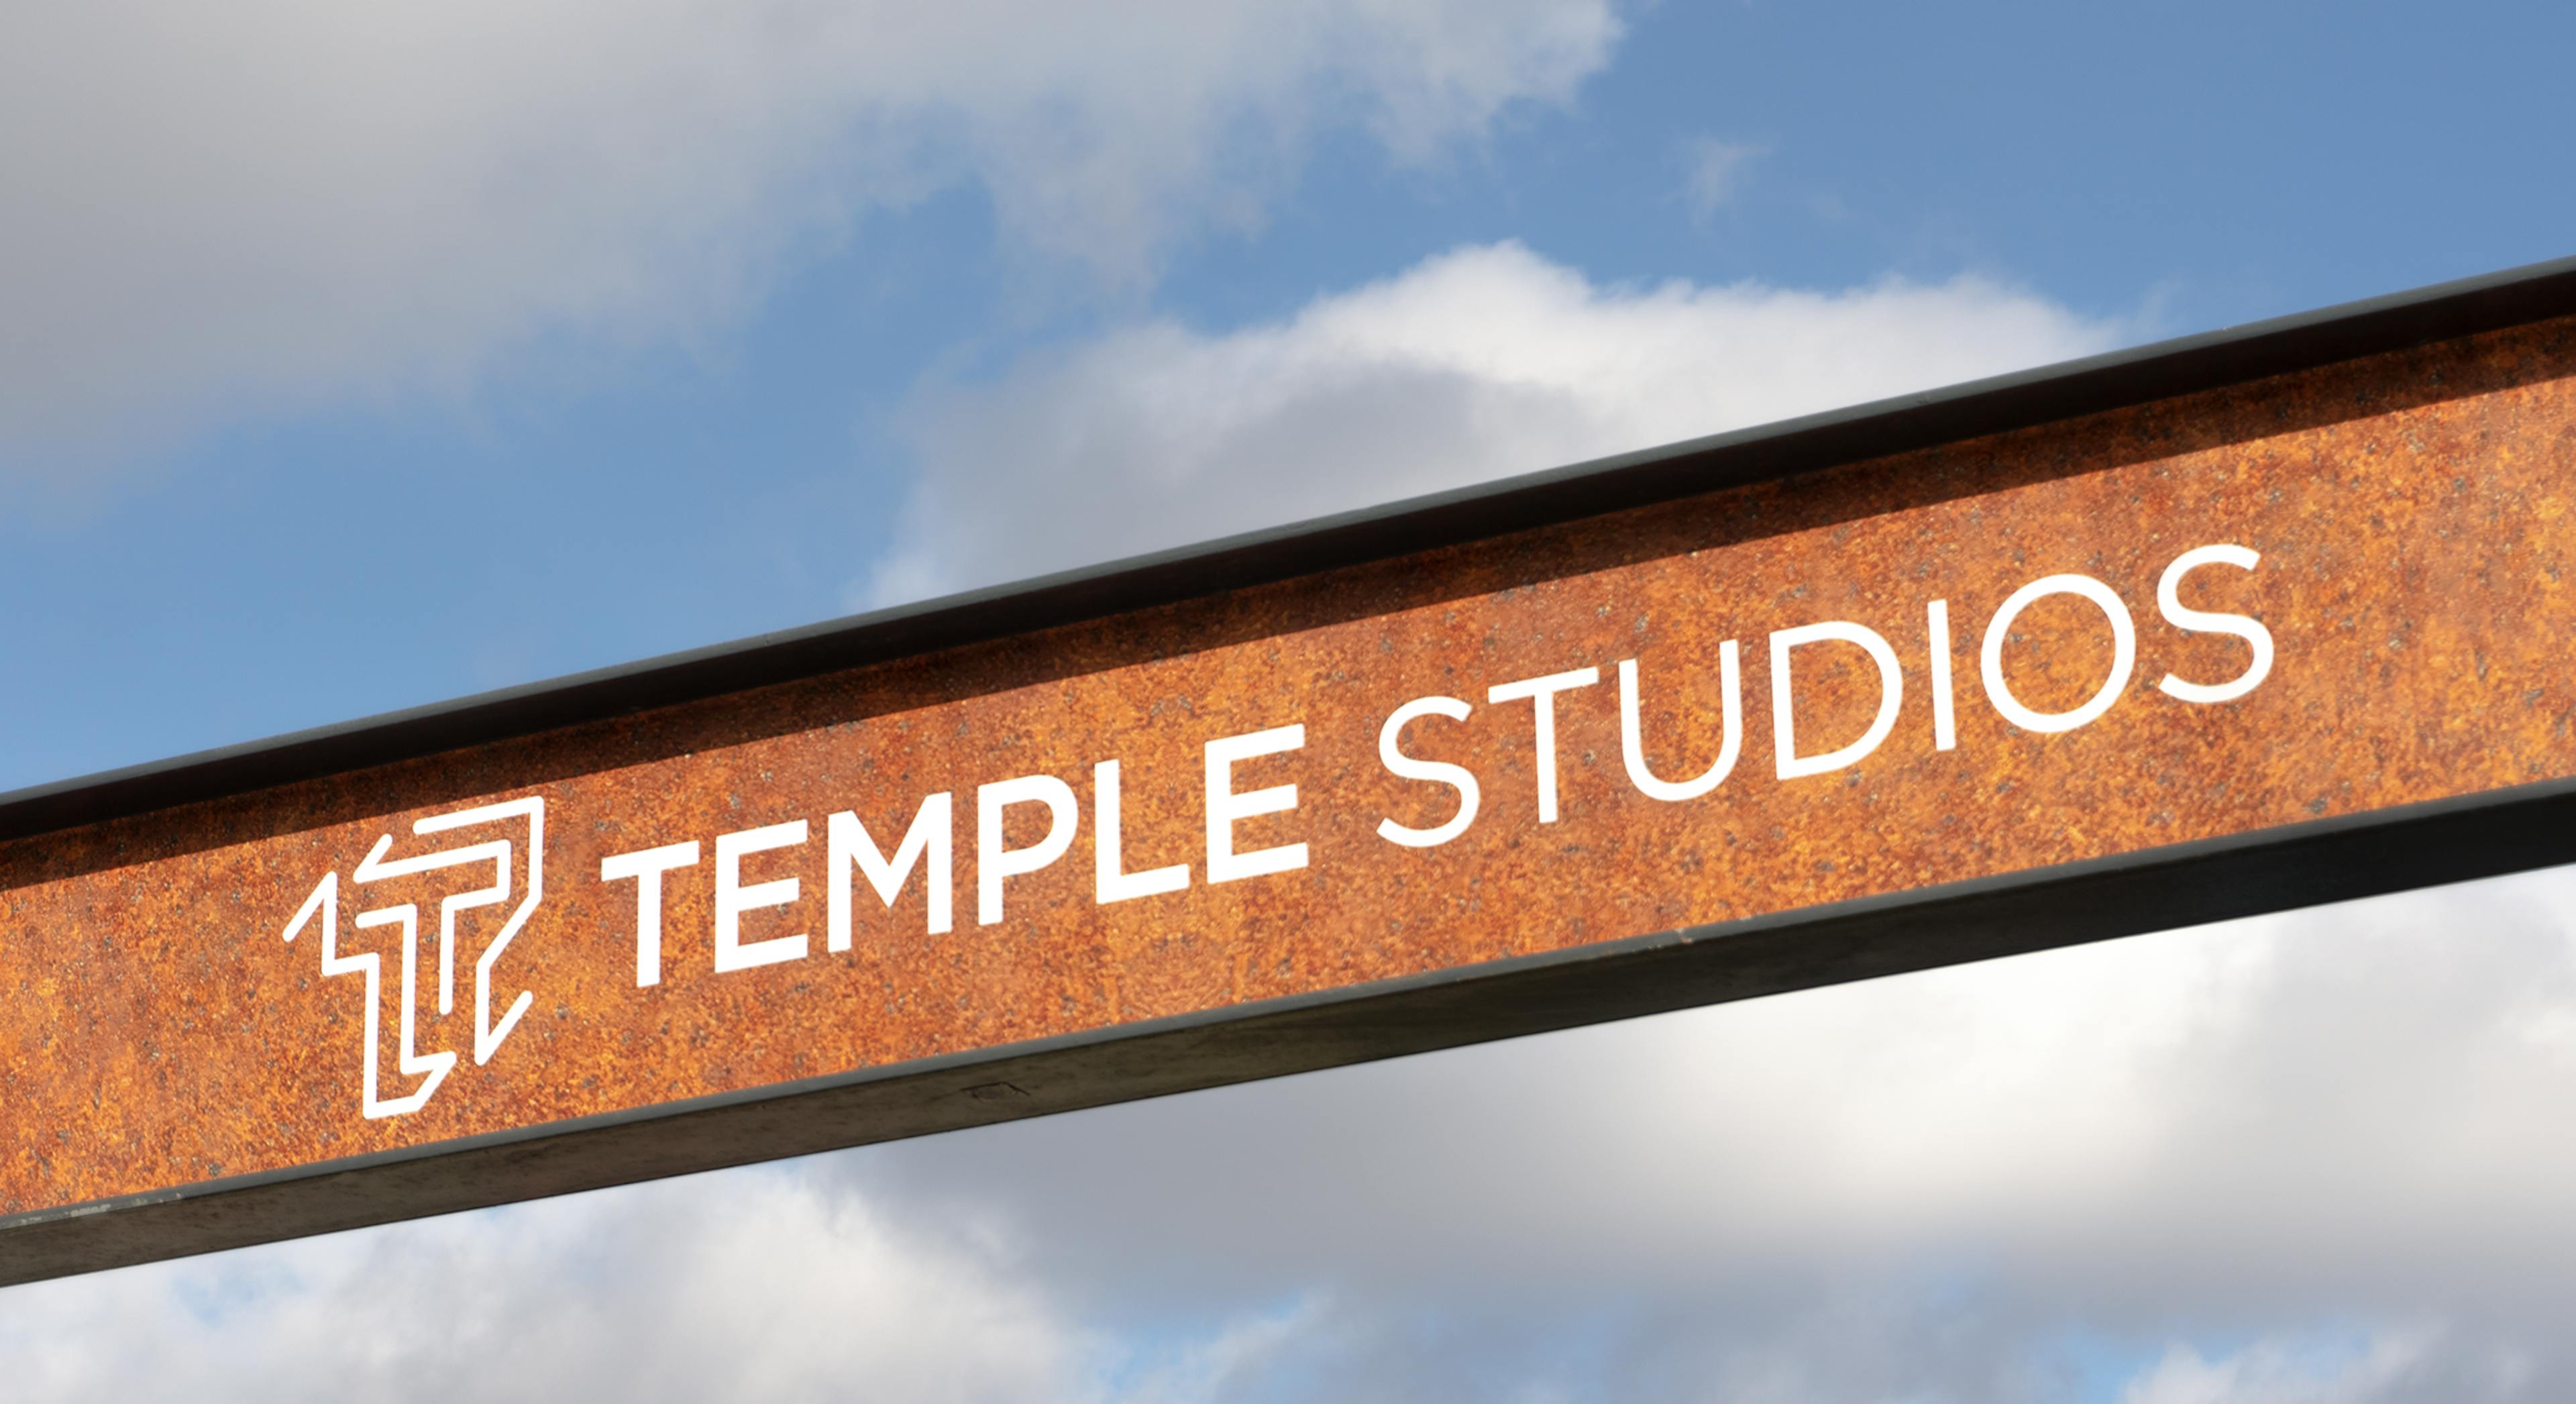 temple studios sign